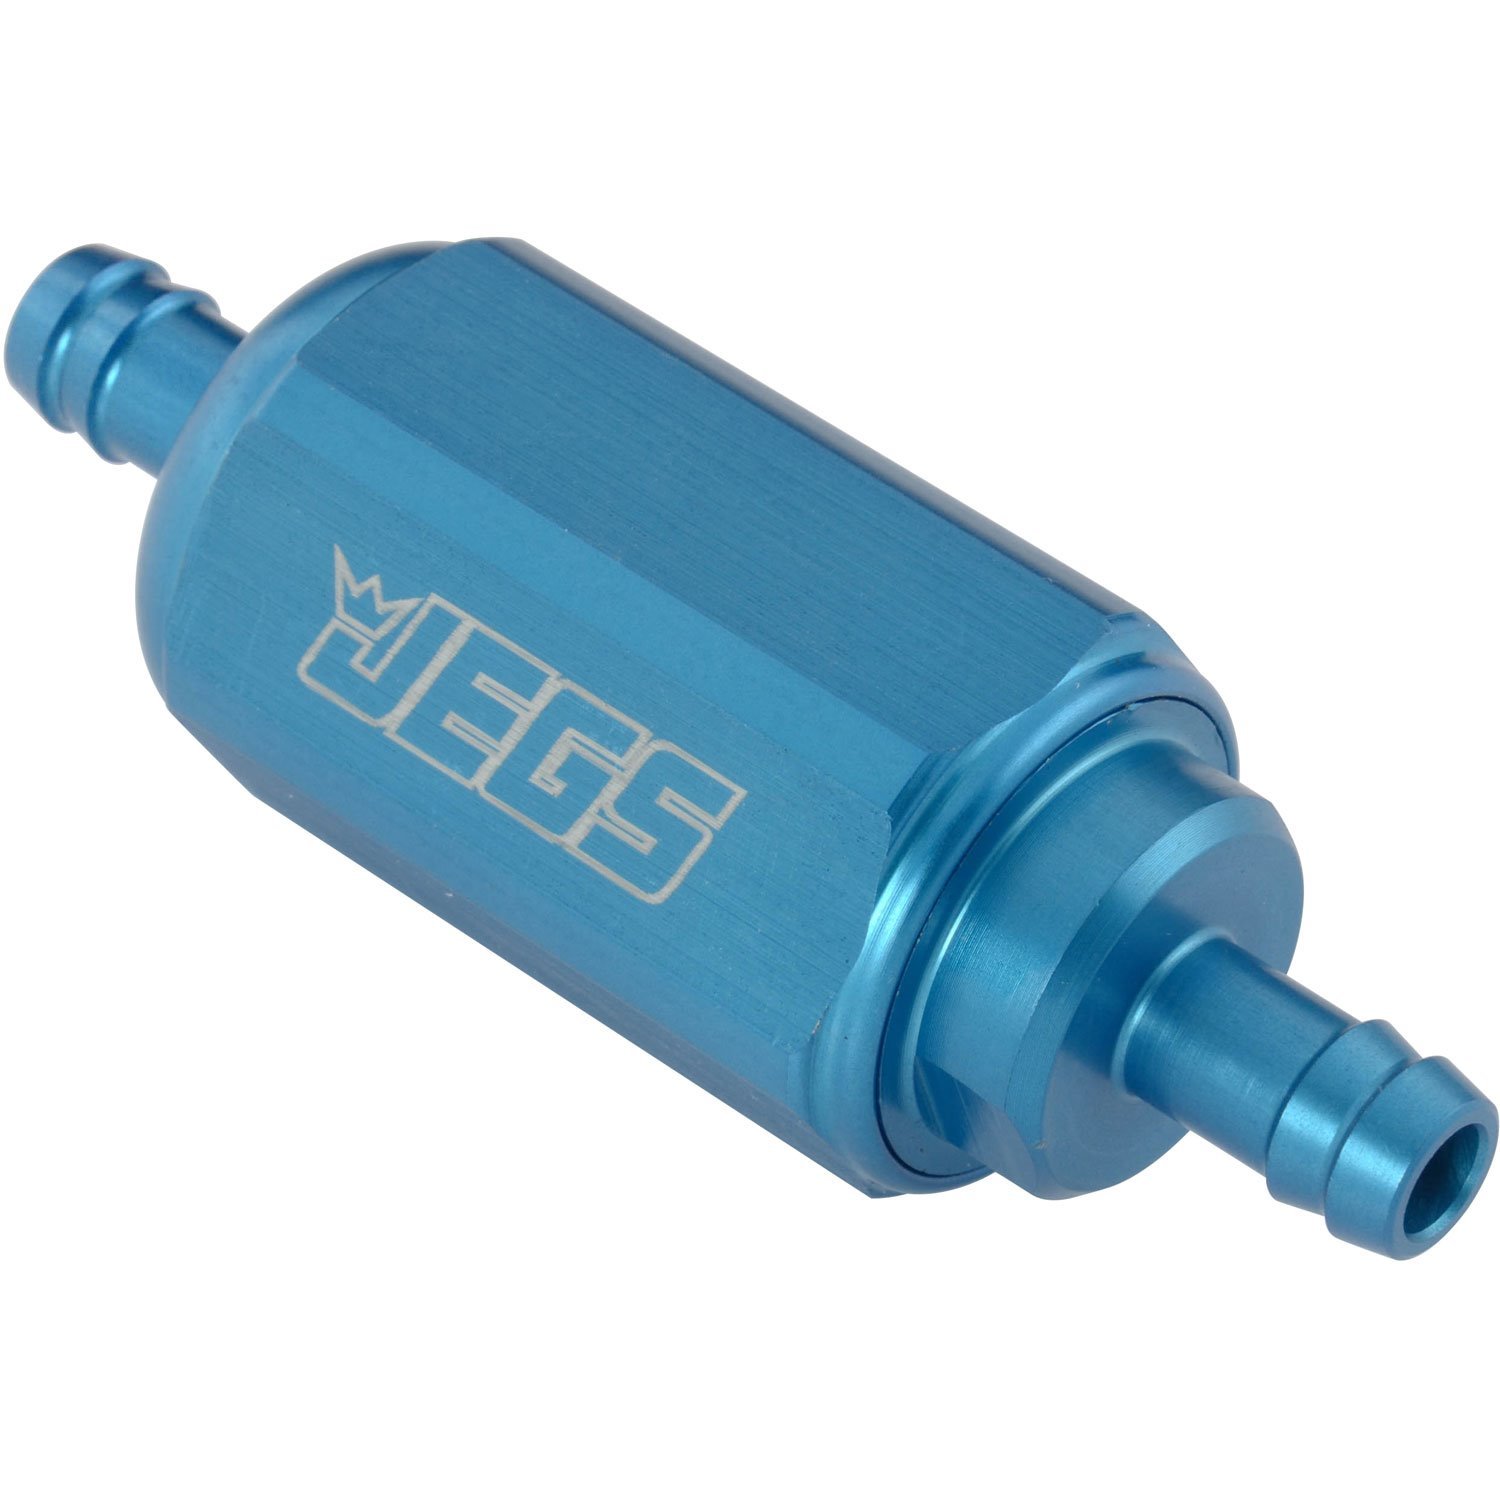 JEGS 15042 Compact Billet In-Line Fuel Filter